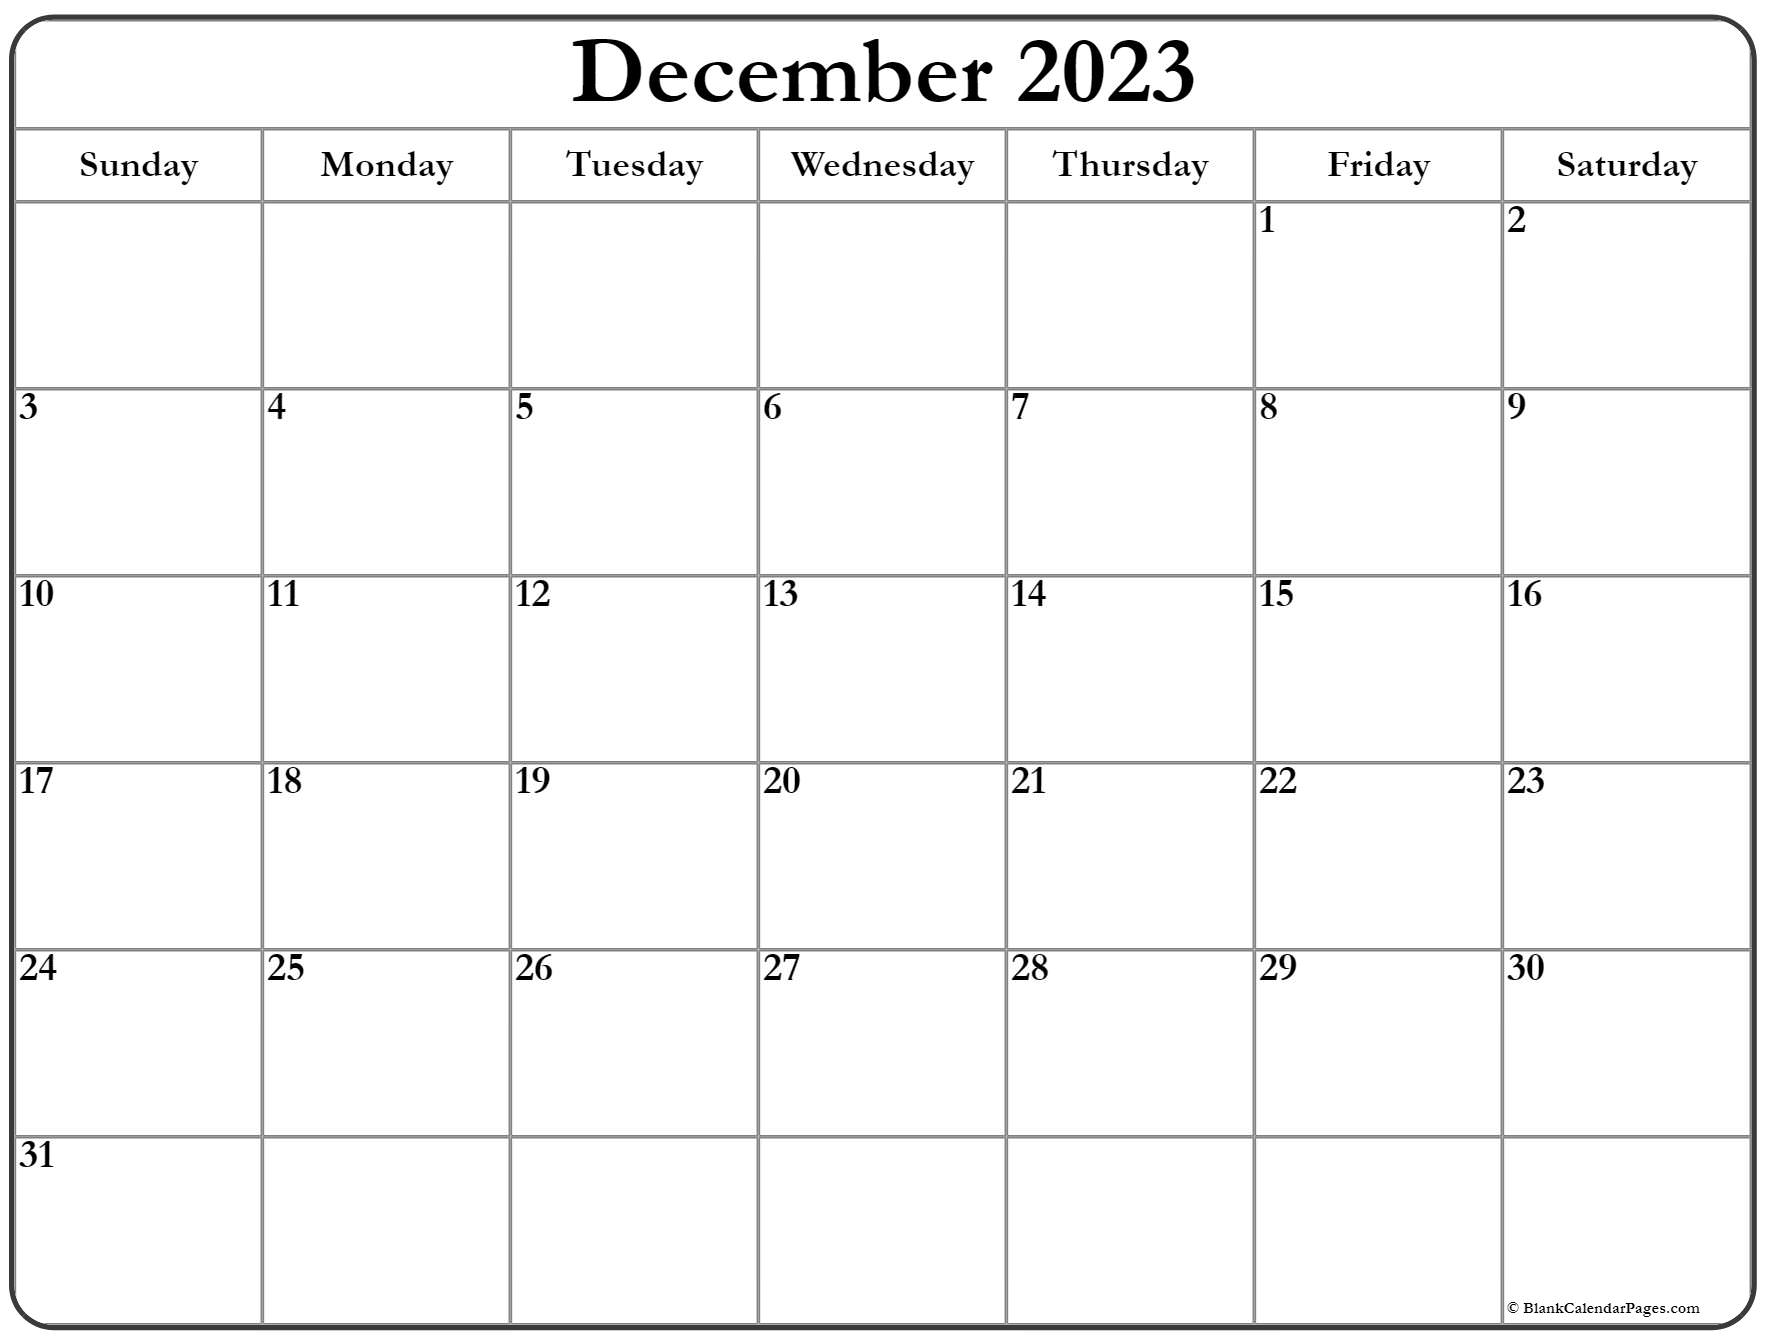 free-printable-calendar-december-2023-2023-calendar-printable